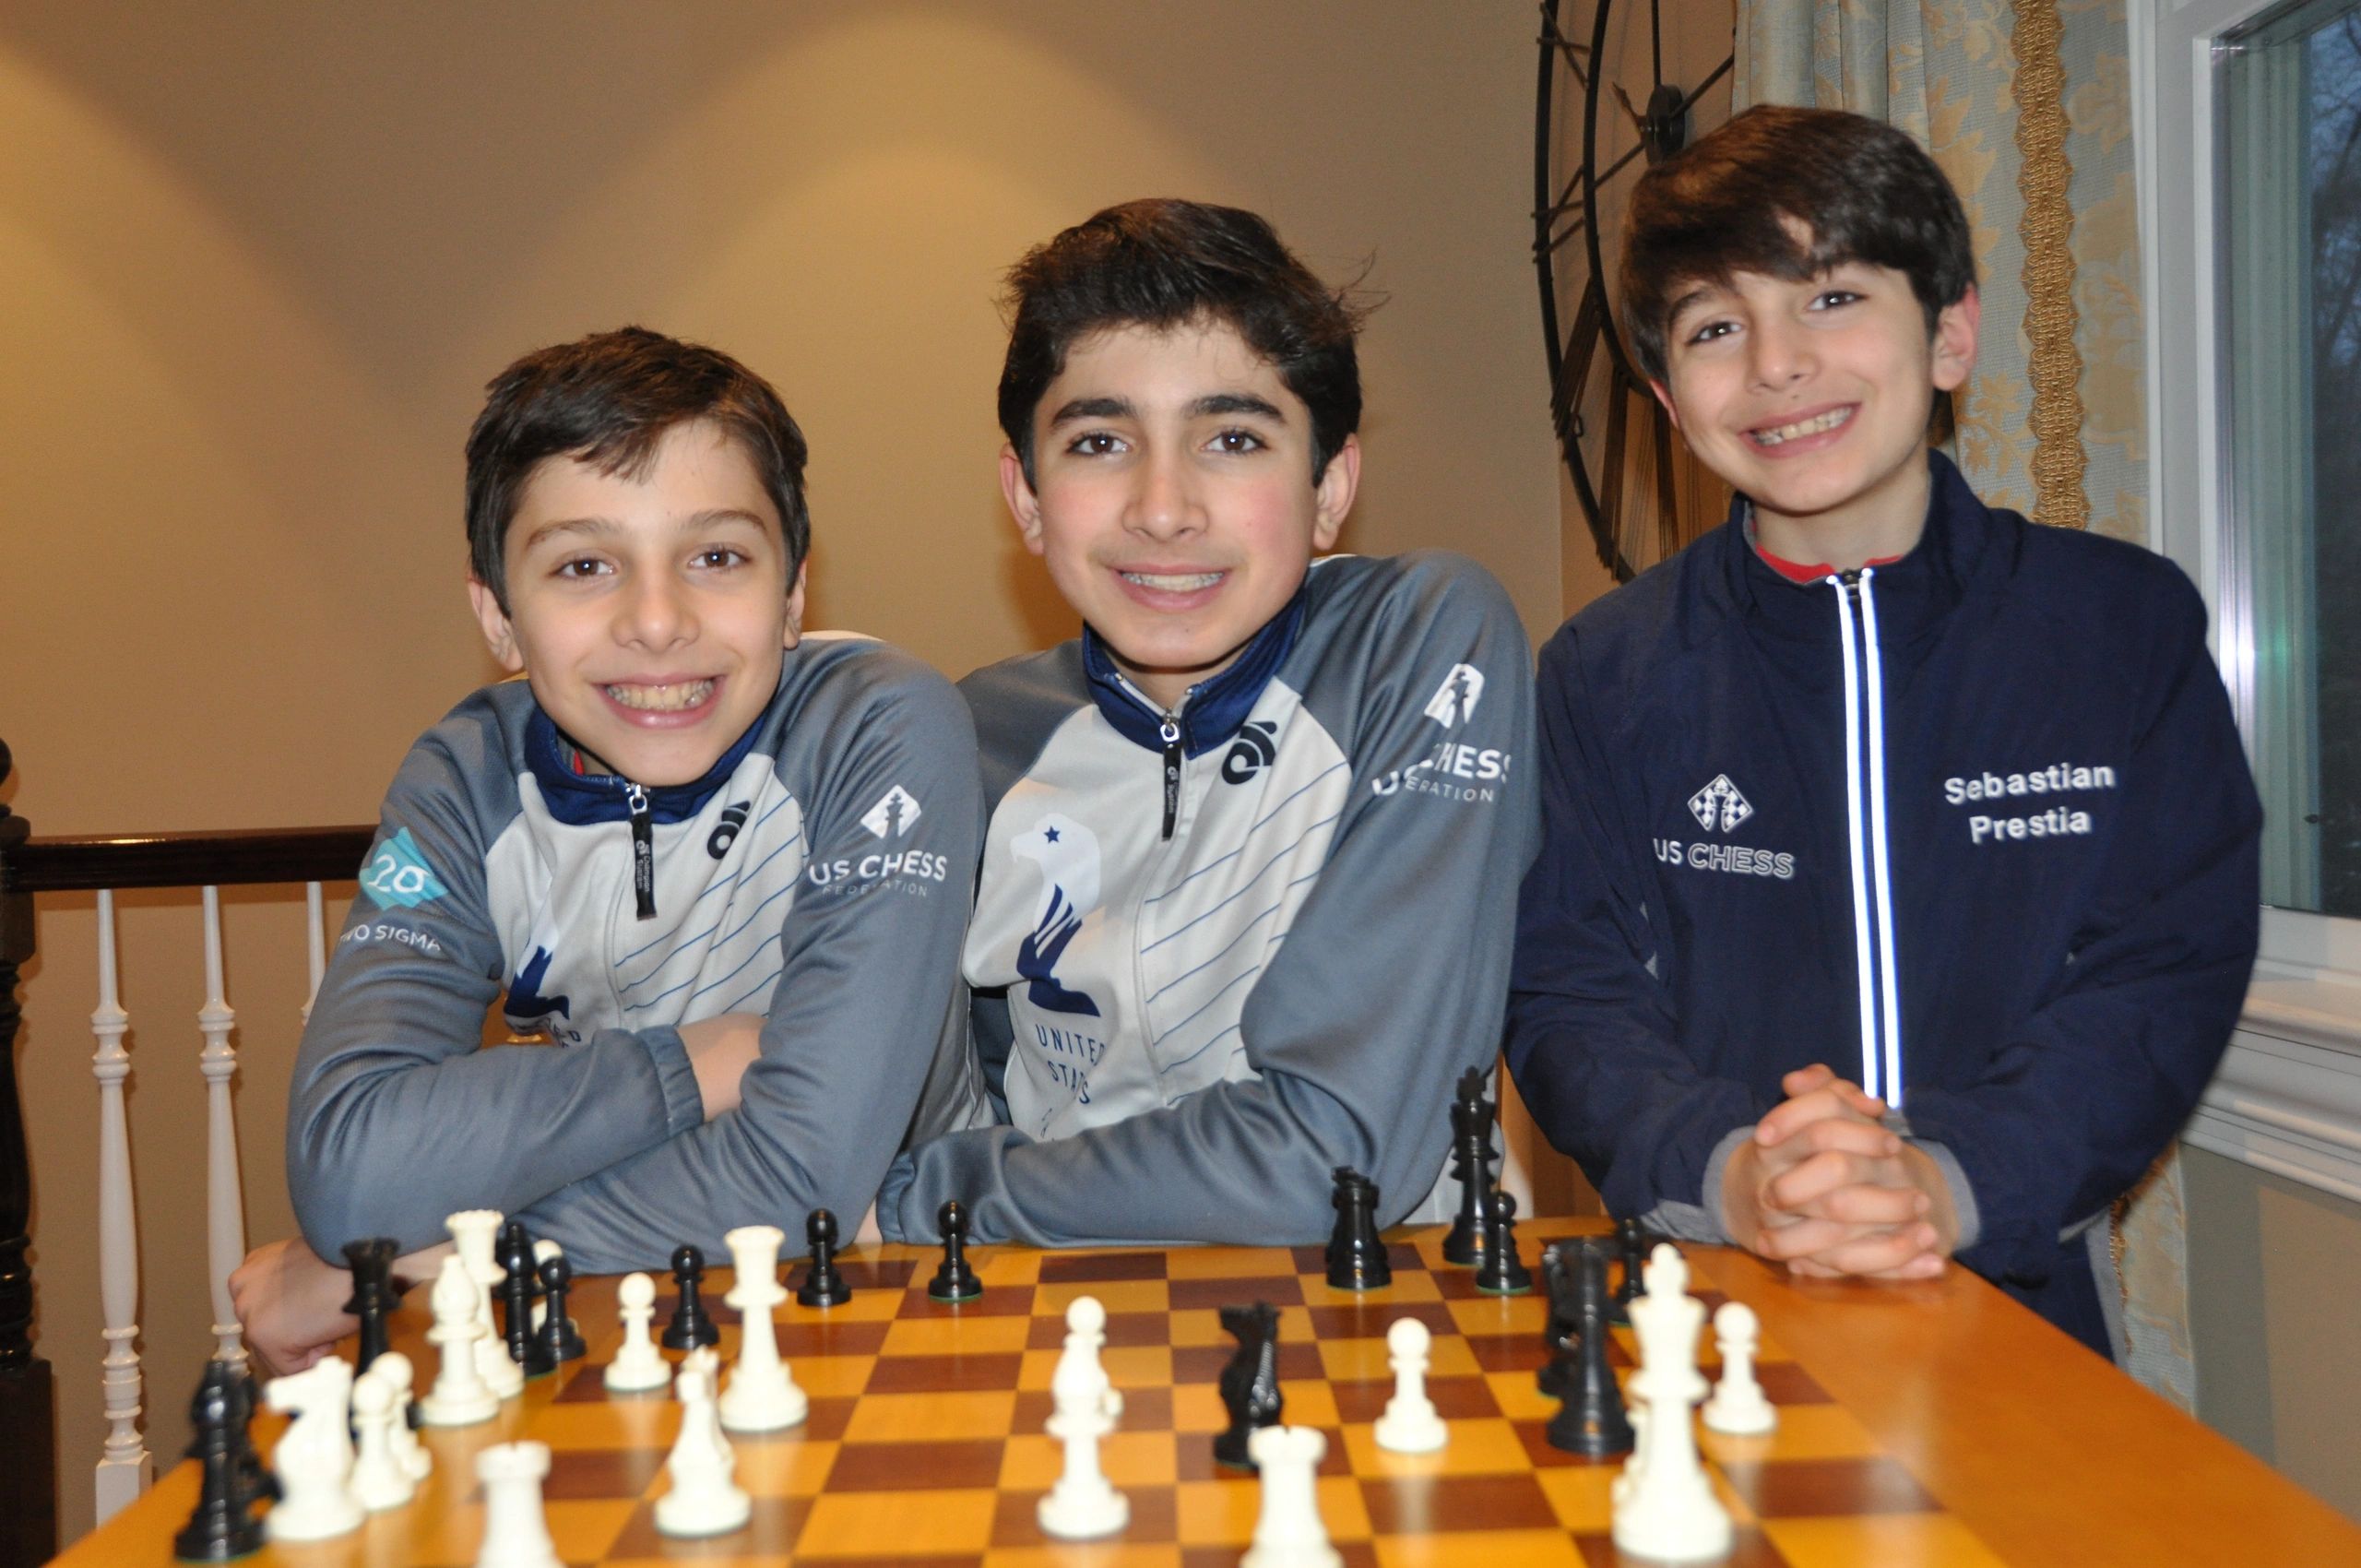 Prestia brothers Frankie, Paris and Sebastian, United States Chess Federation Record holders